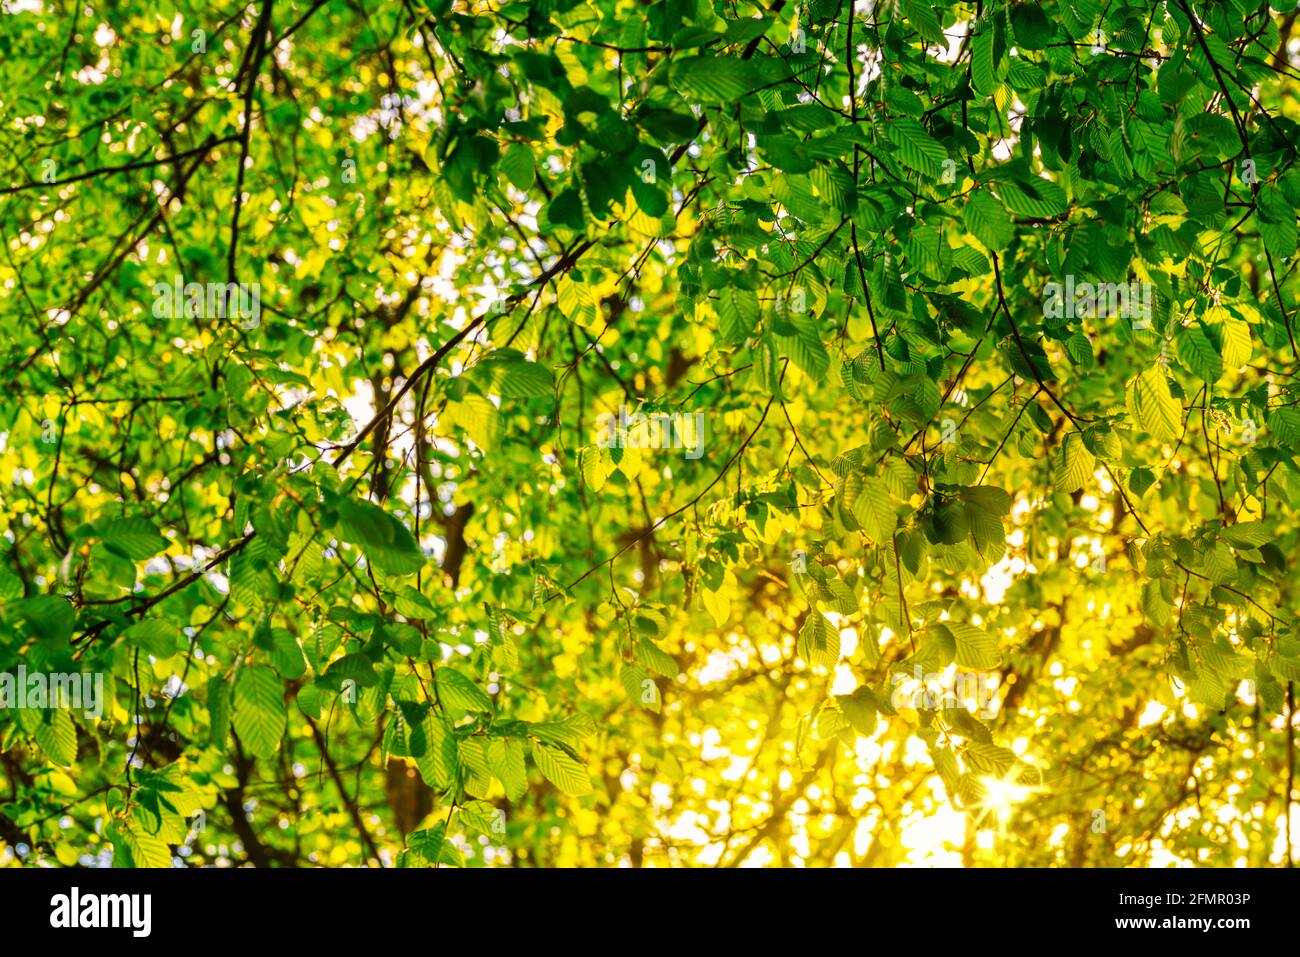 golden rays of sunlight shining through lush fresh green leaves on tree Stock Photo